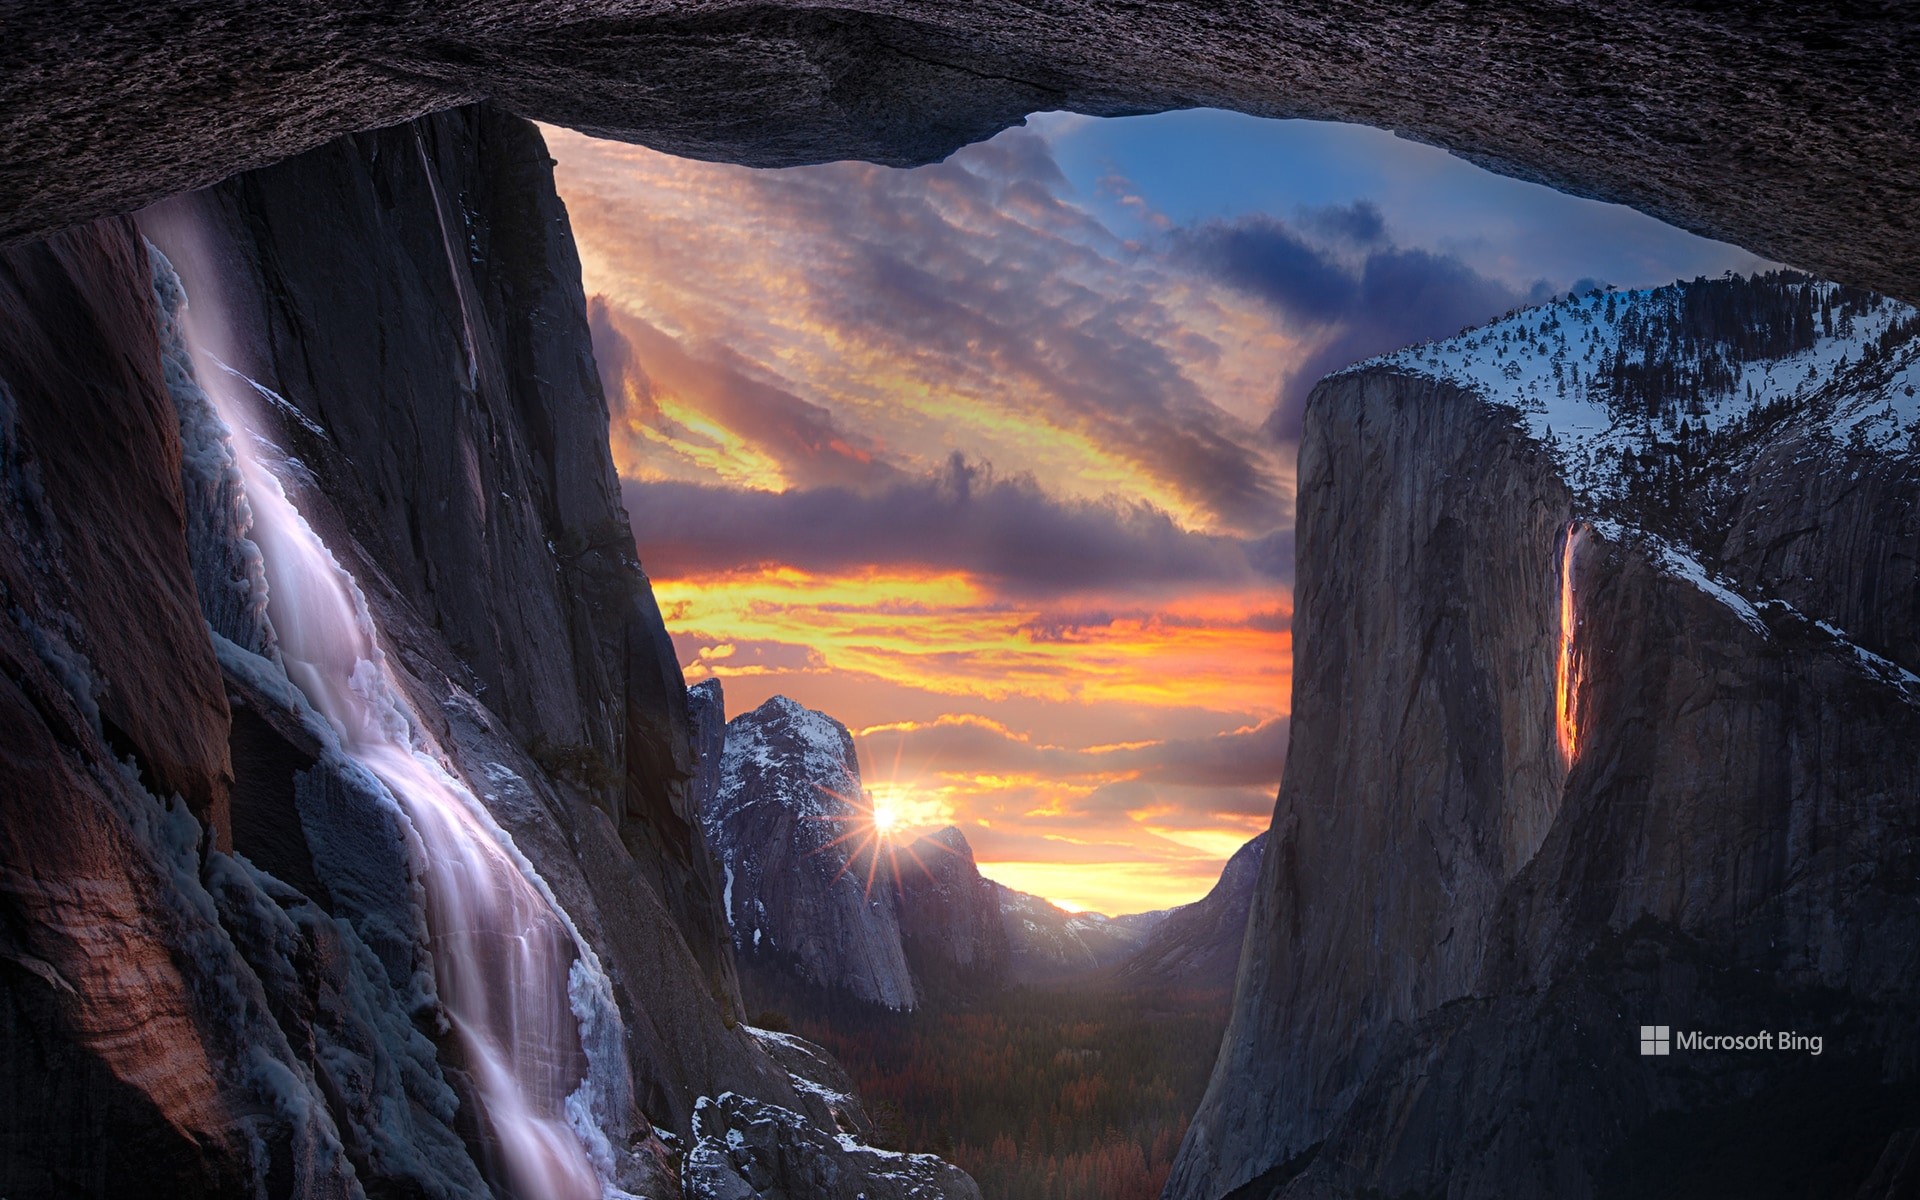 'Firefall' on Horsetail Fall, Yosemite National Park, California